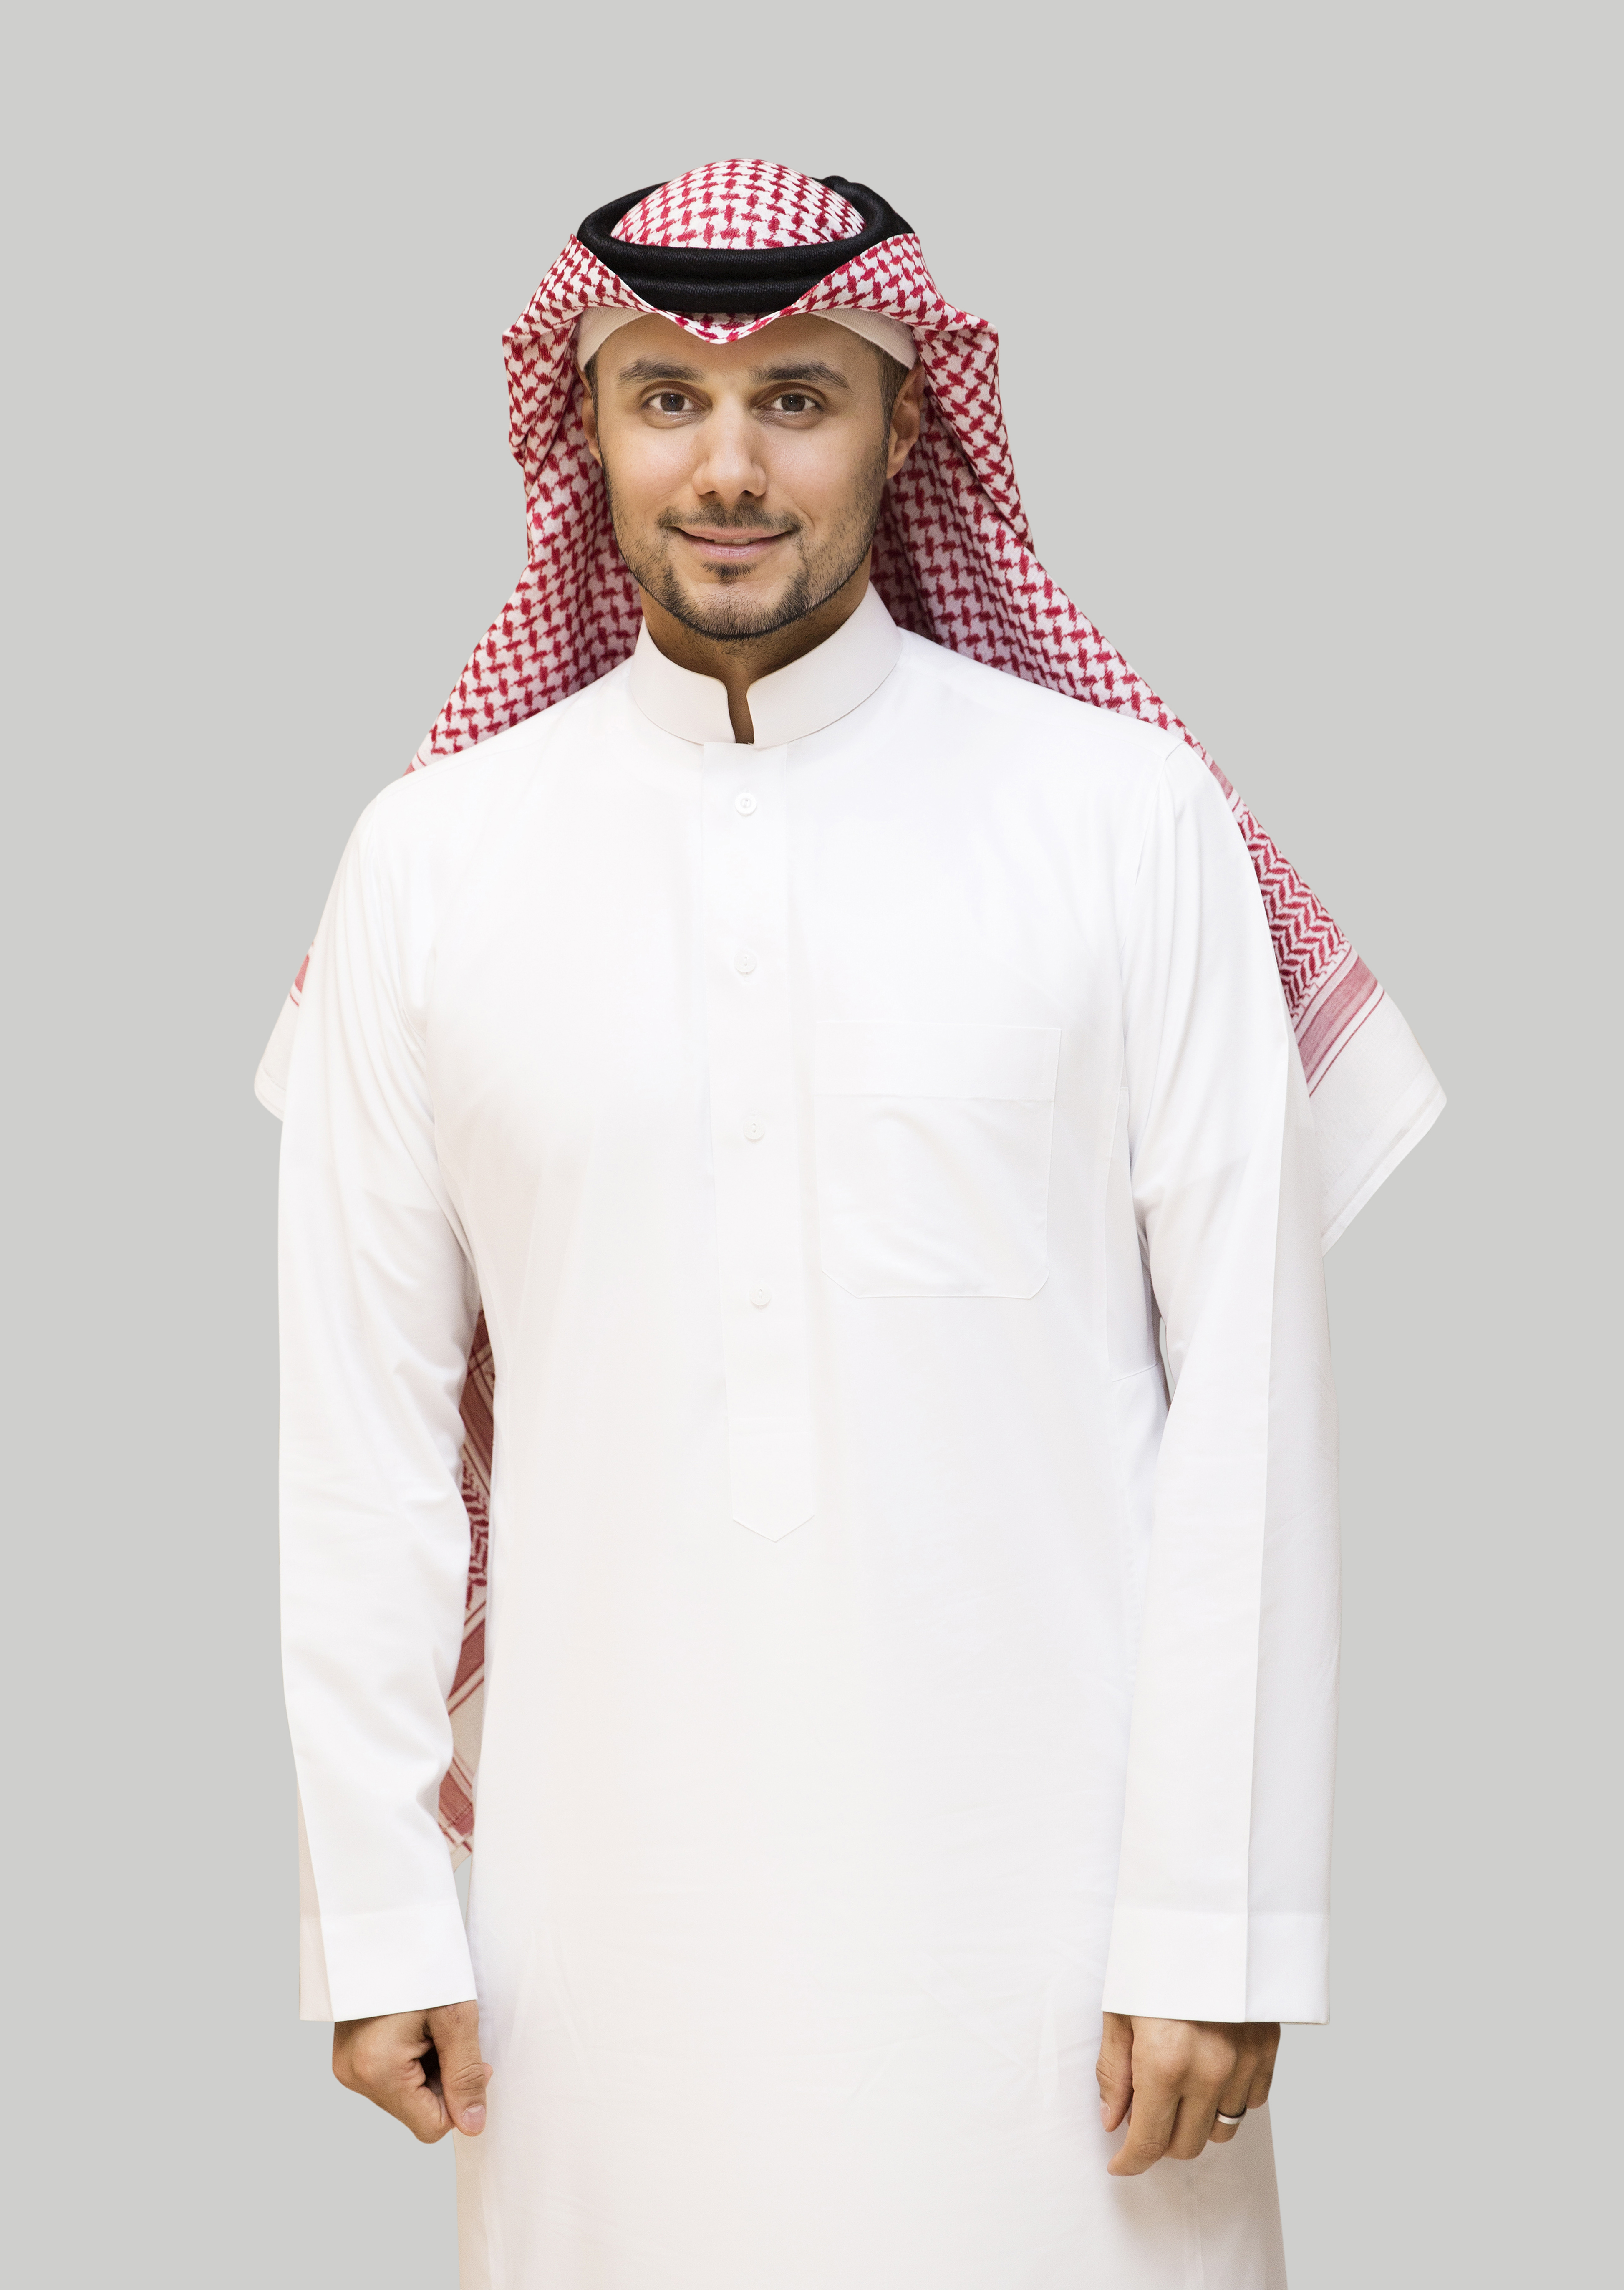 Prince alwaleed bin khaled bin talal